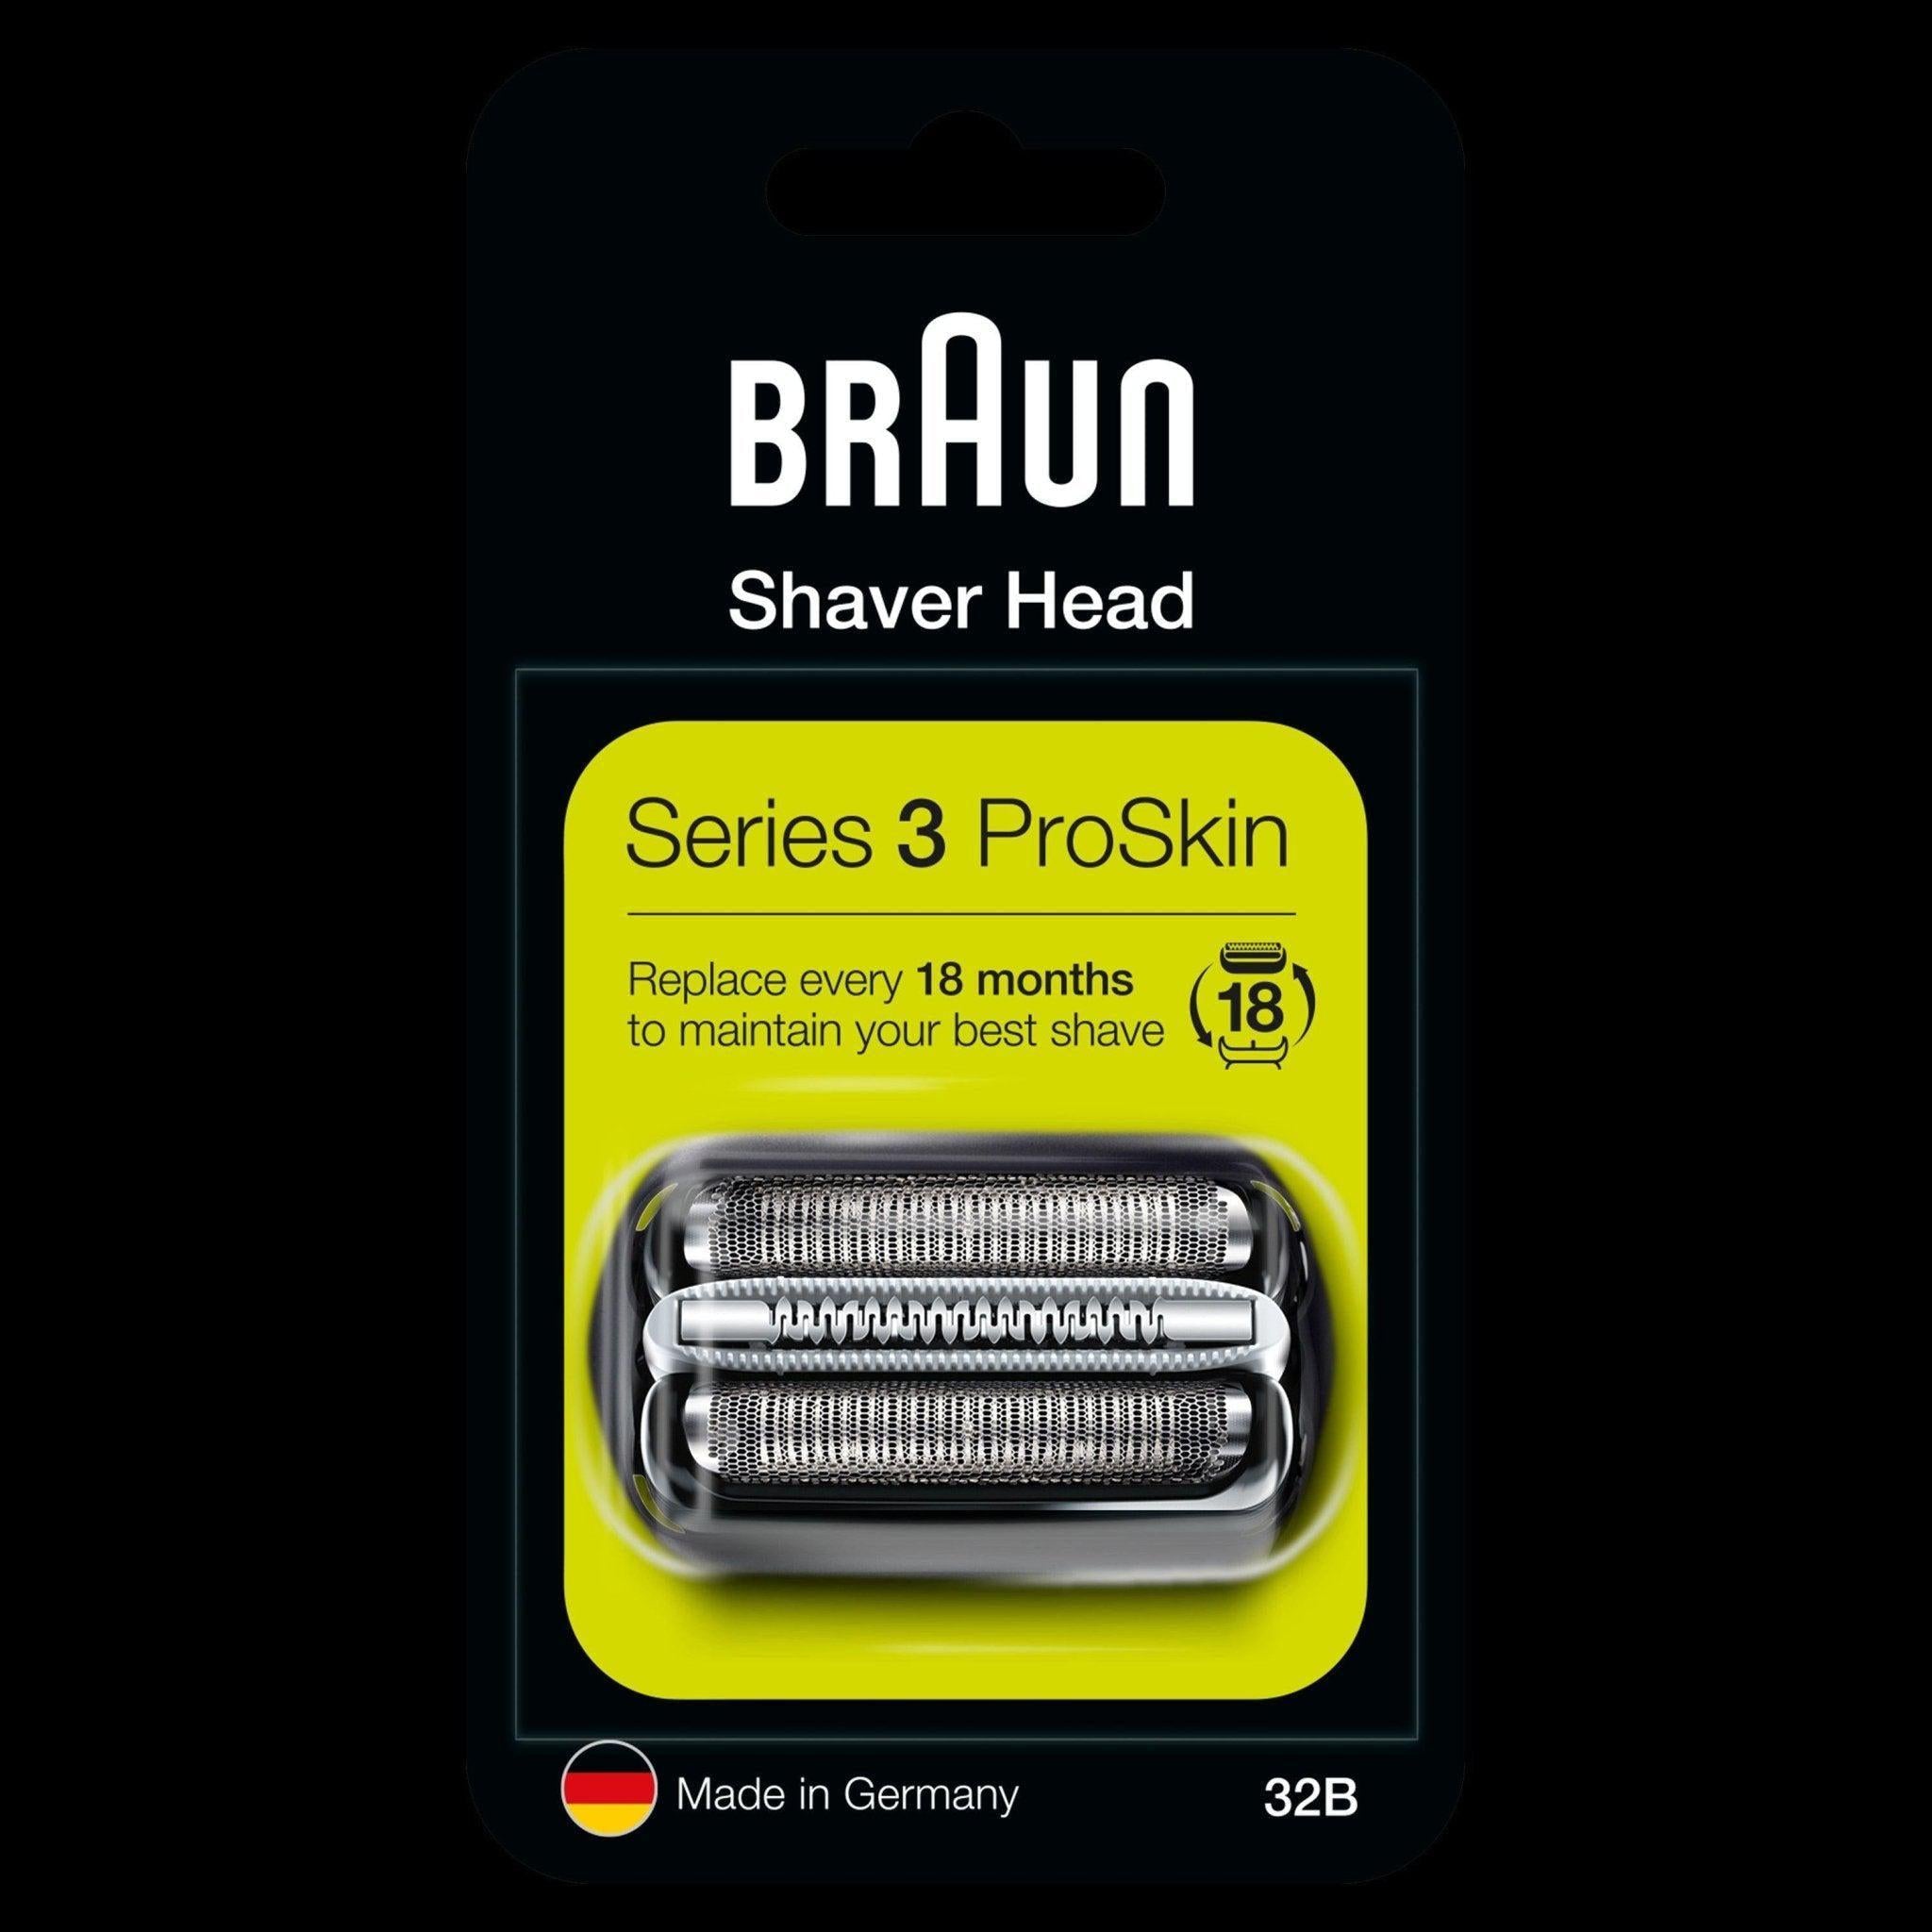 Braun Series 3 32b Replacement Razor Head, Electric Razors, Beauty &  Health